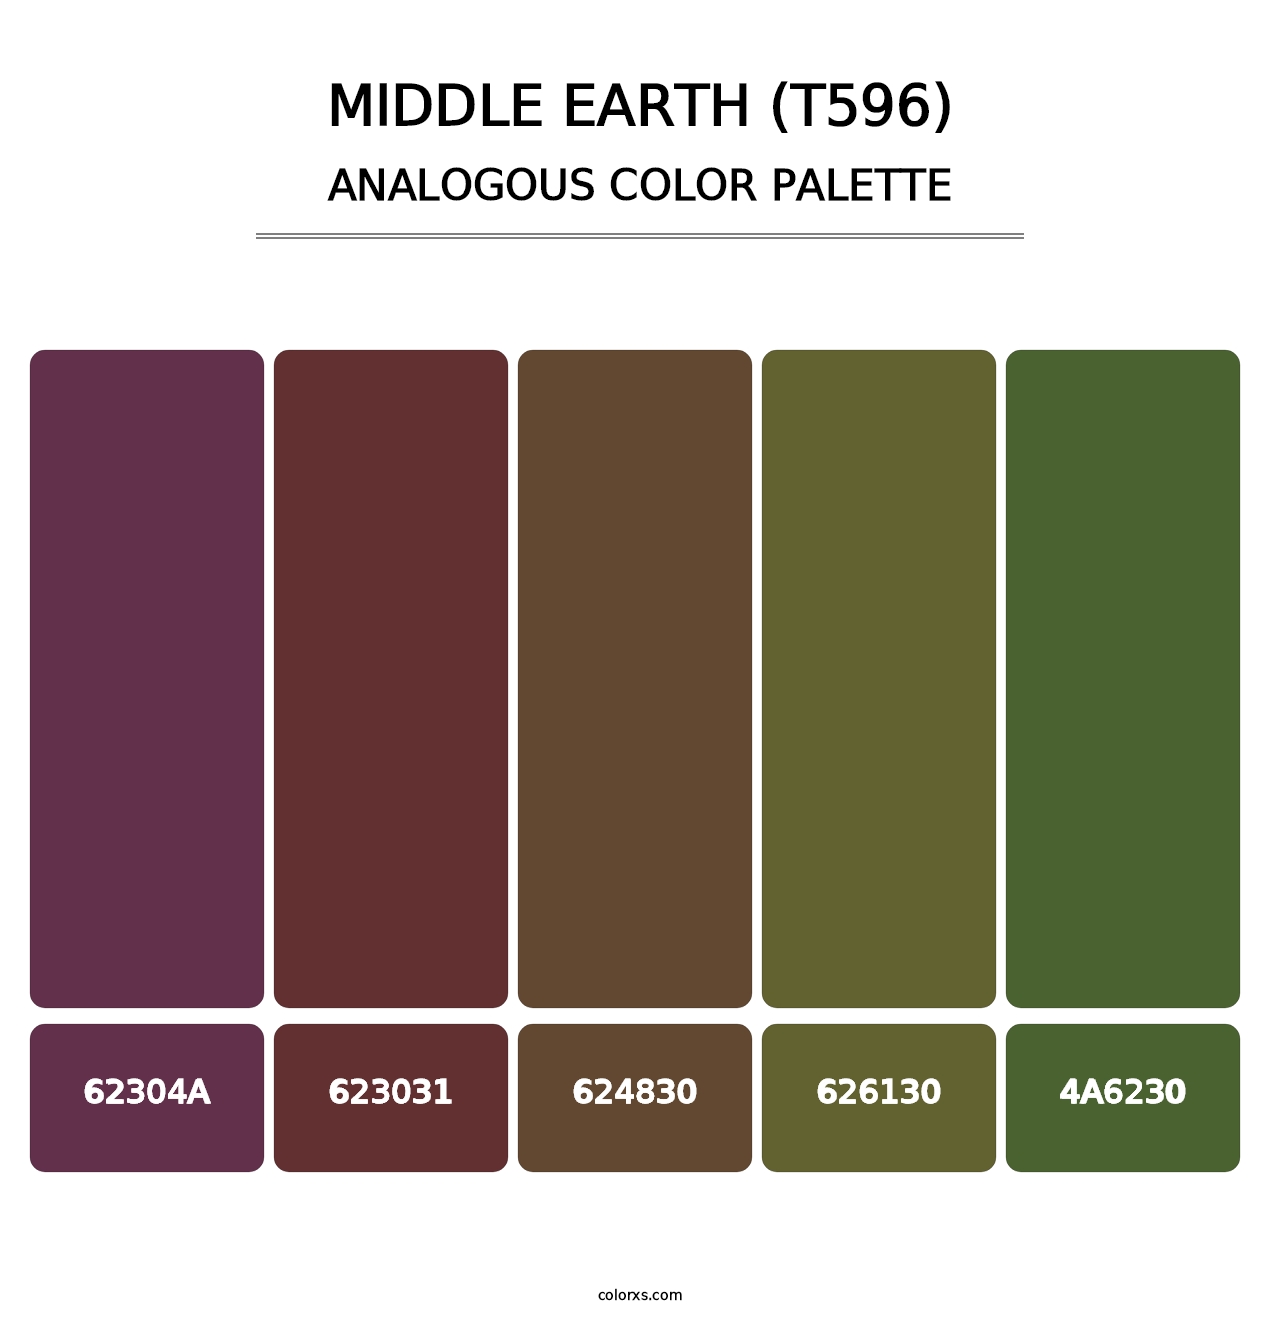 Middle Earth (T596) - Analogous Color Palette